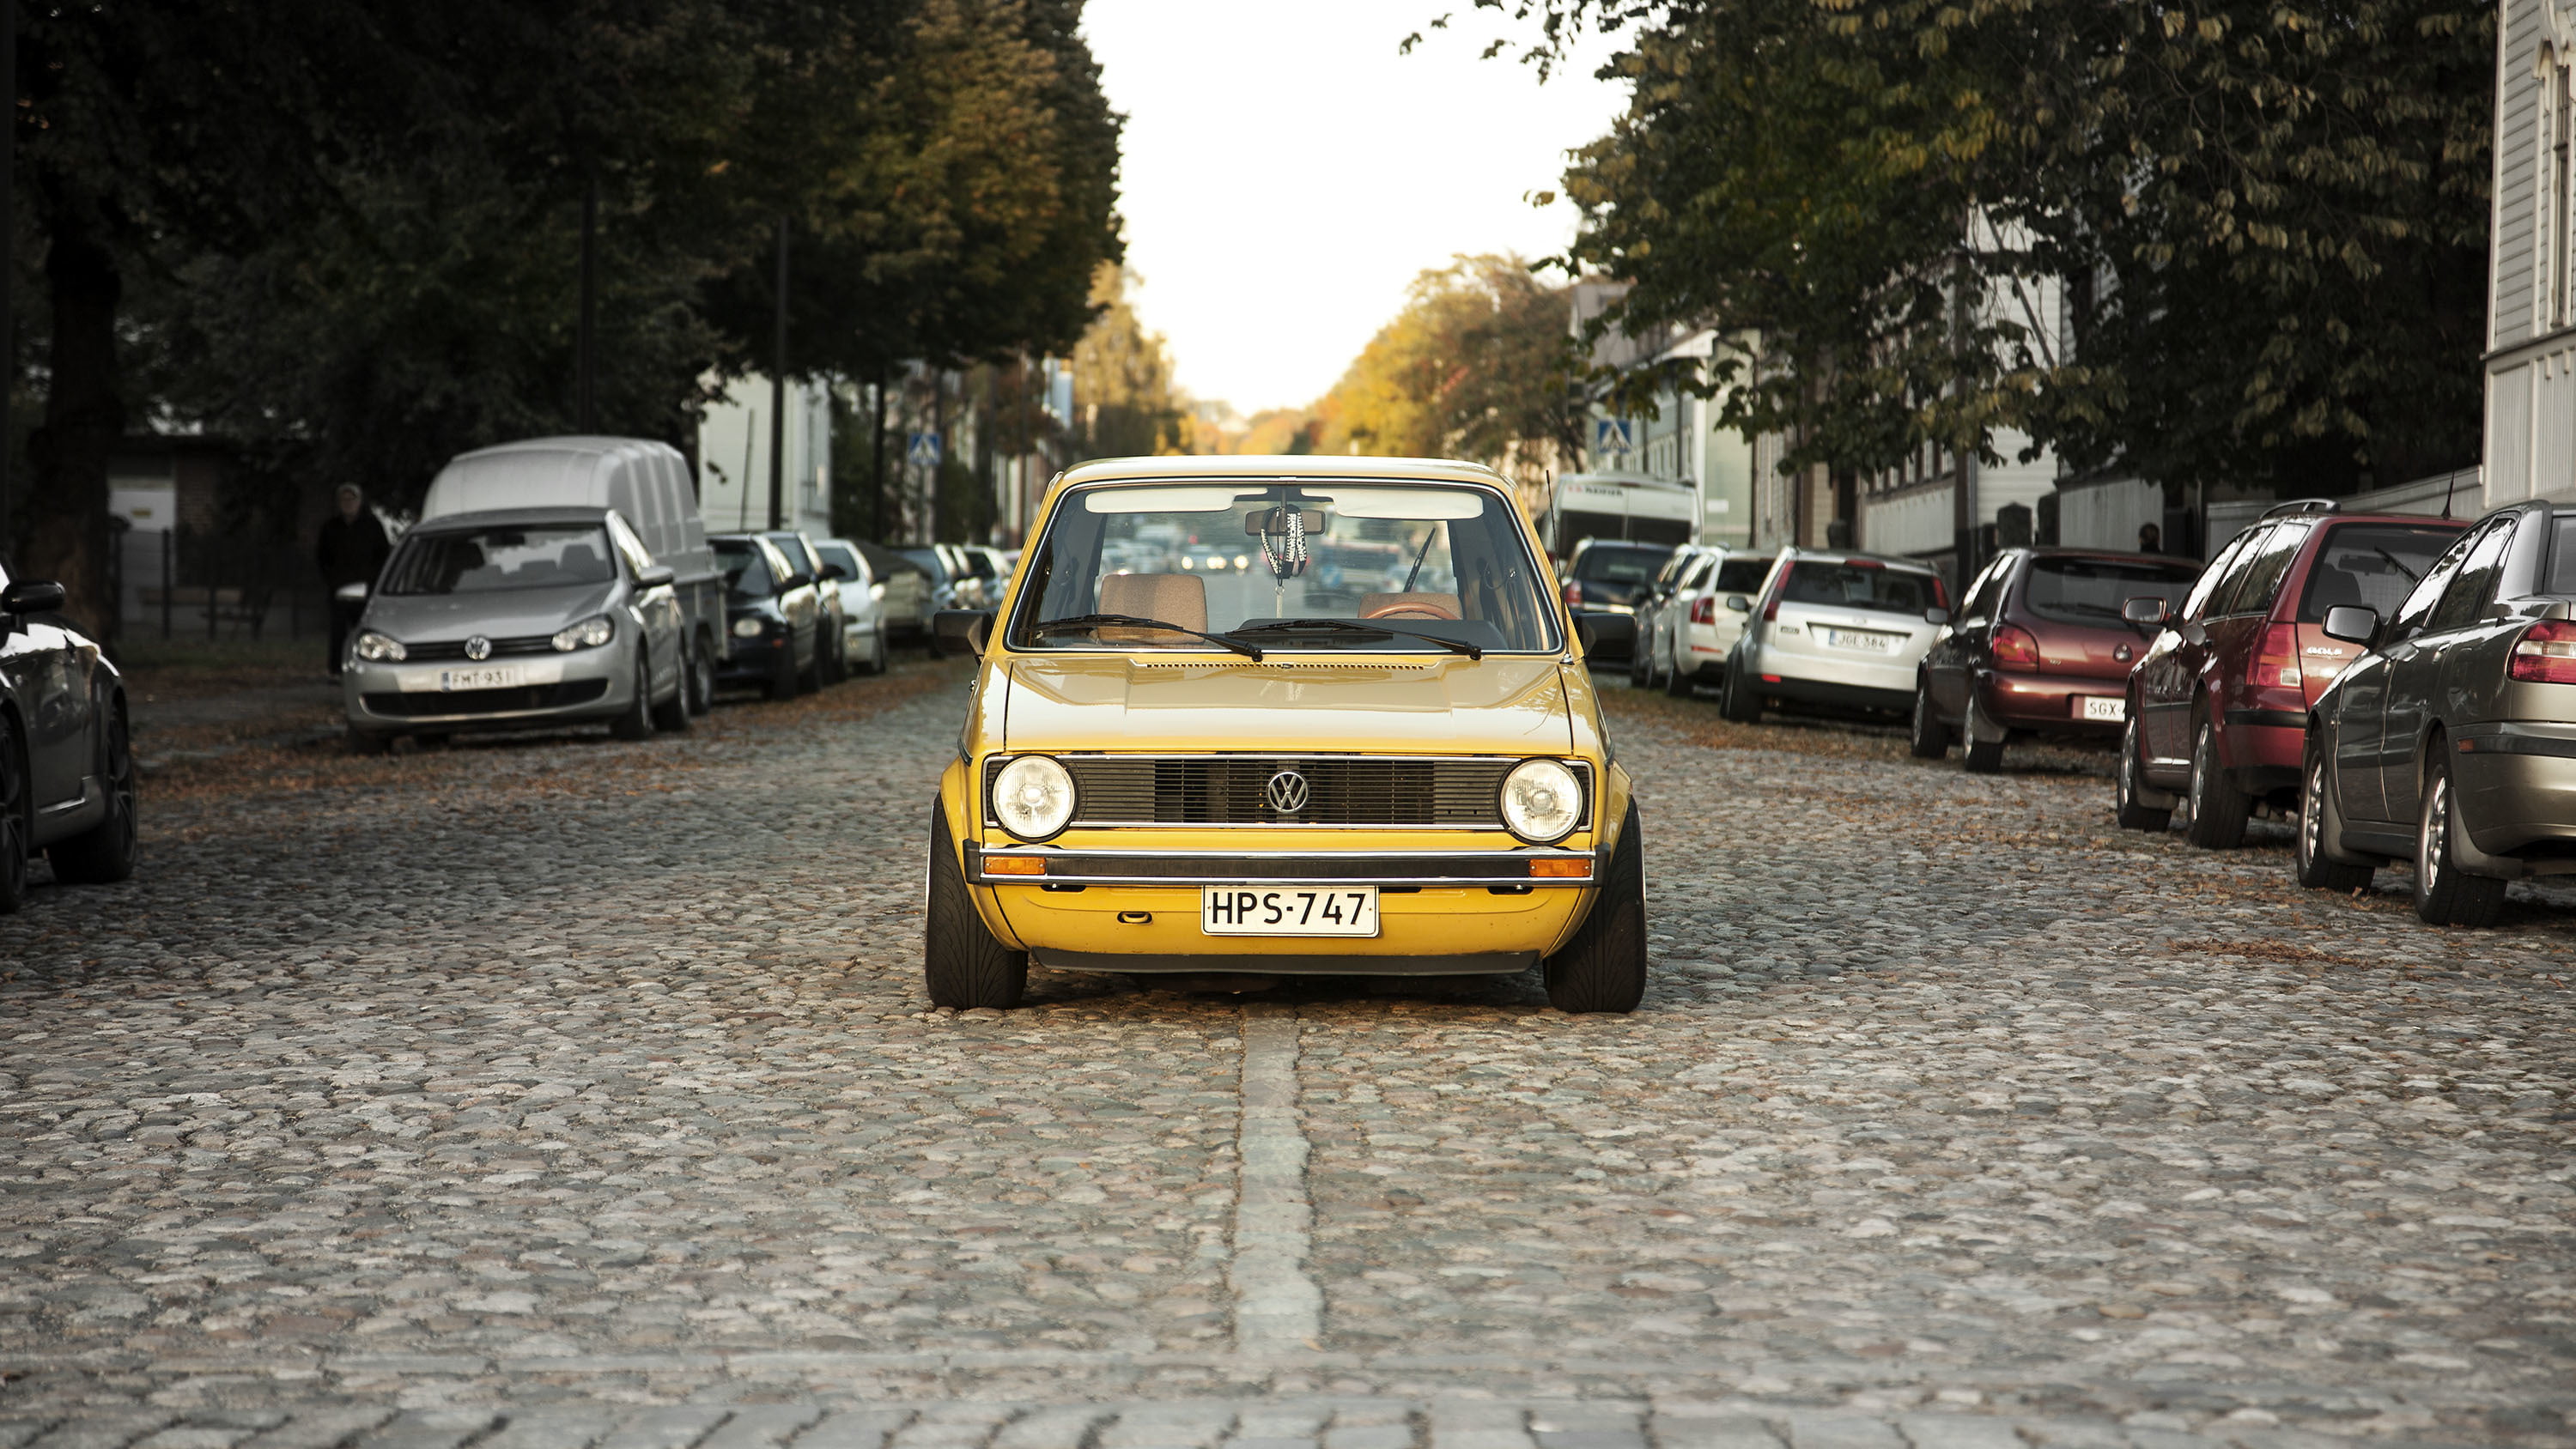 yellow vehicle, volkswagen, golf, mk1, front view, car, street